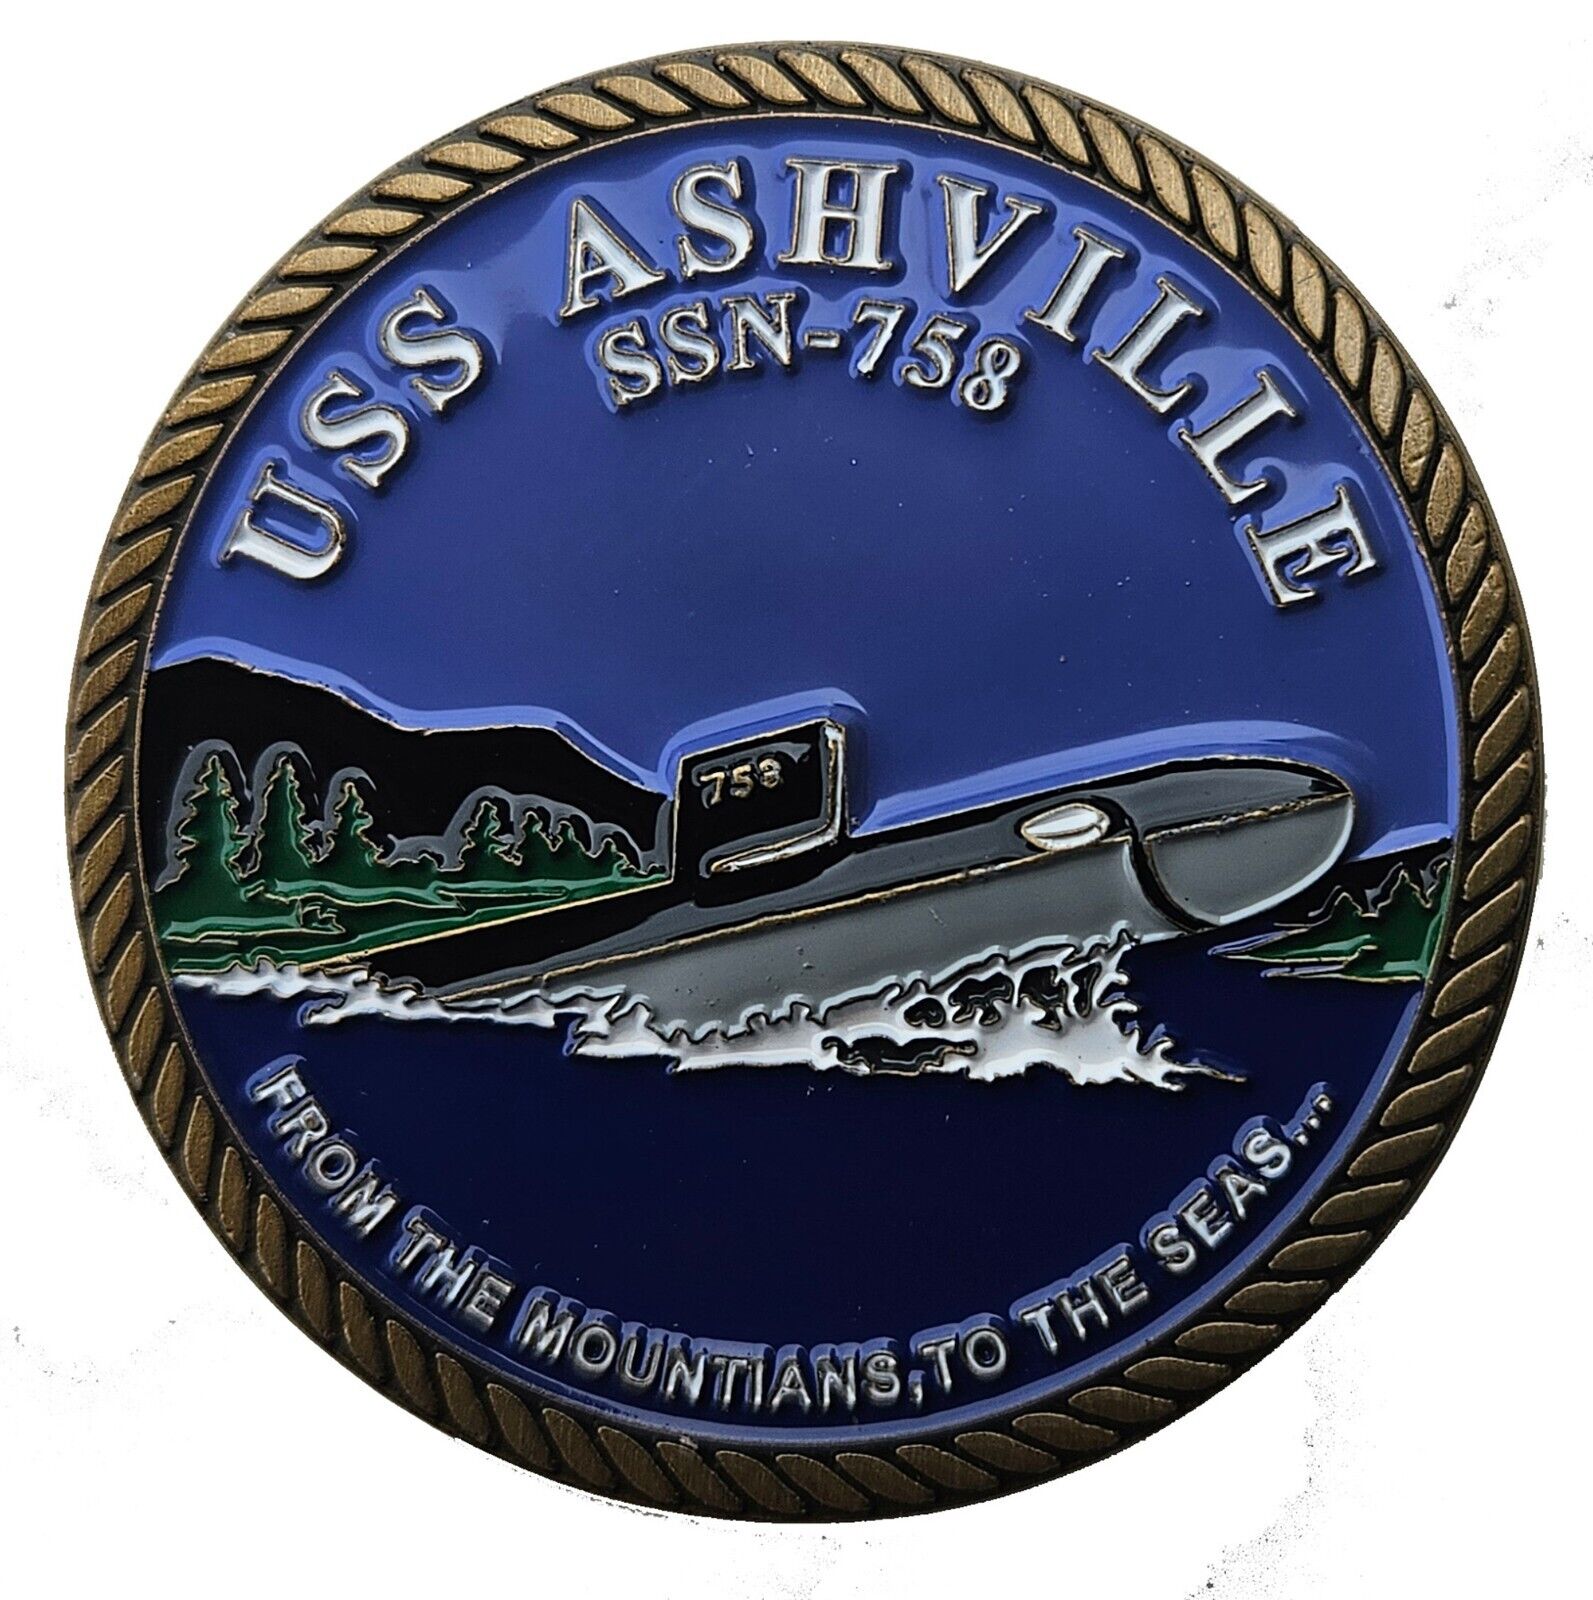 US NAVY USS ASHVILLE SSN 758 COMMEMORATIVE CHALLENGE COIN 193